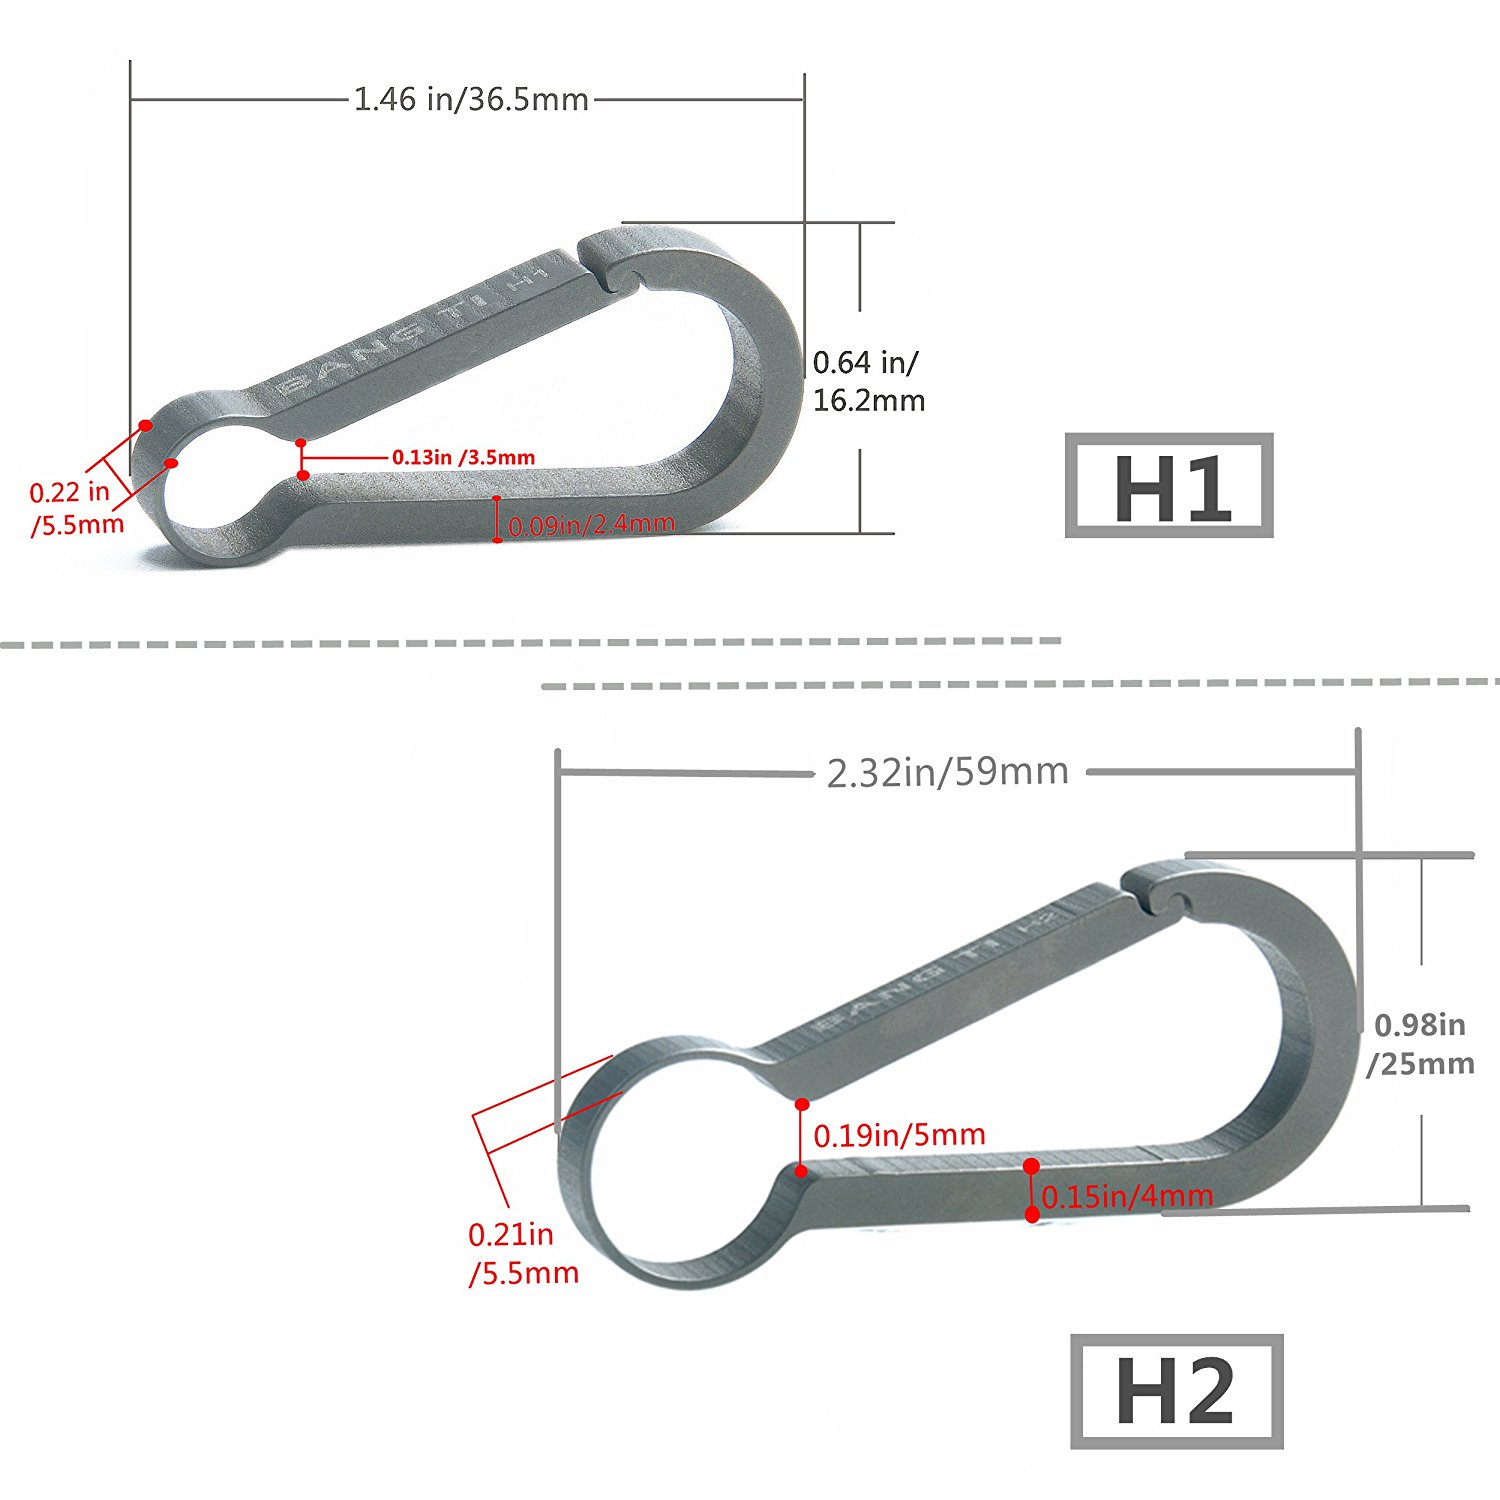 BANG-TI-H2-60mm-Titanium-Quick-Release-Keychain-Belt-Loop-Hook-Key-Clip-1146945